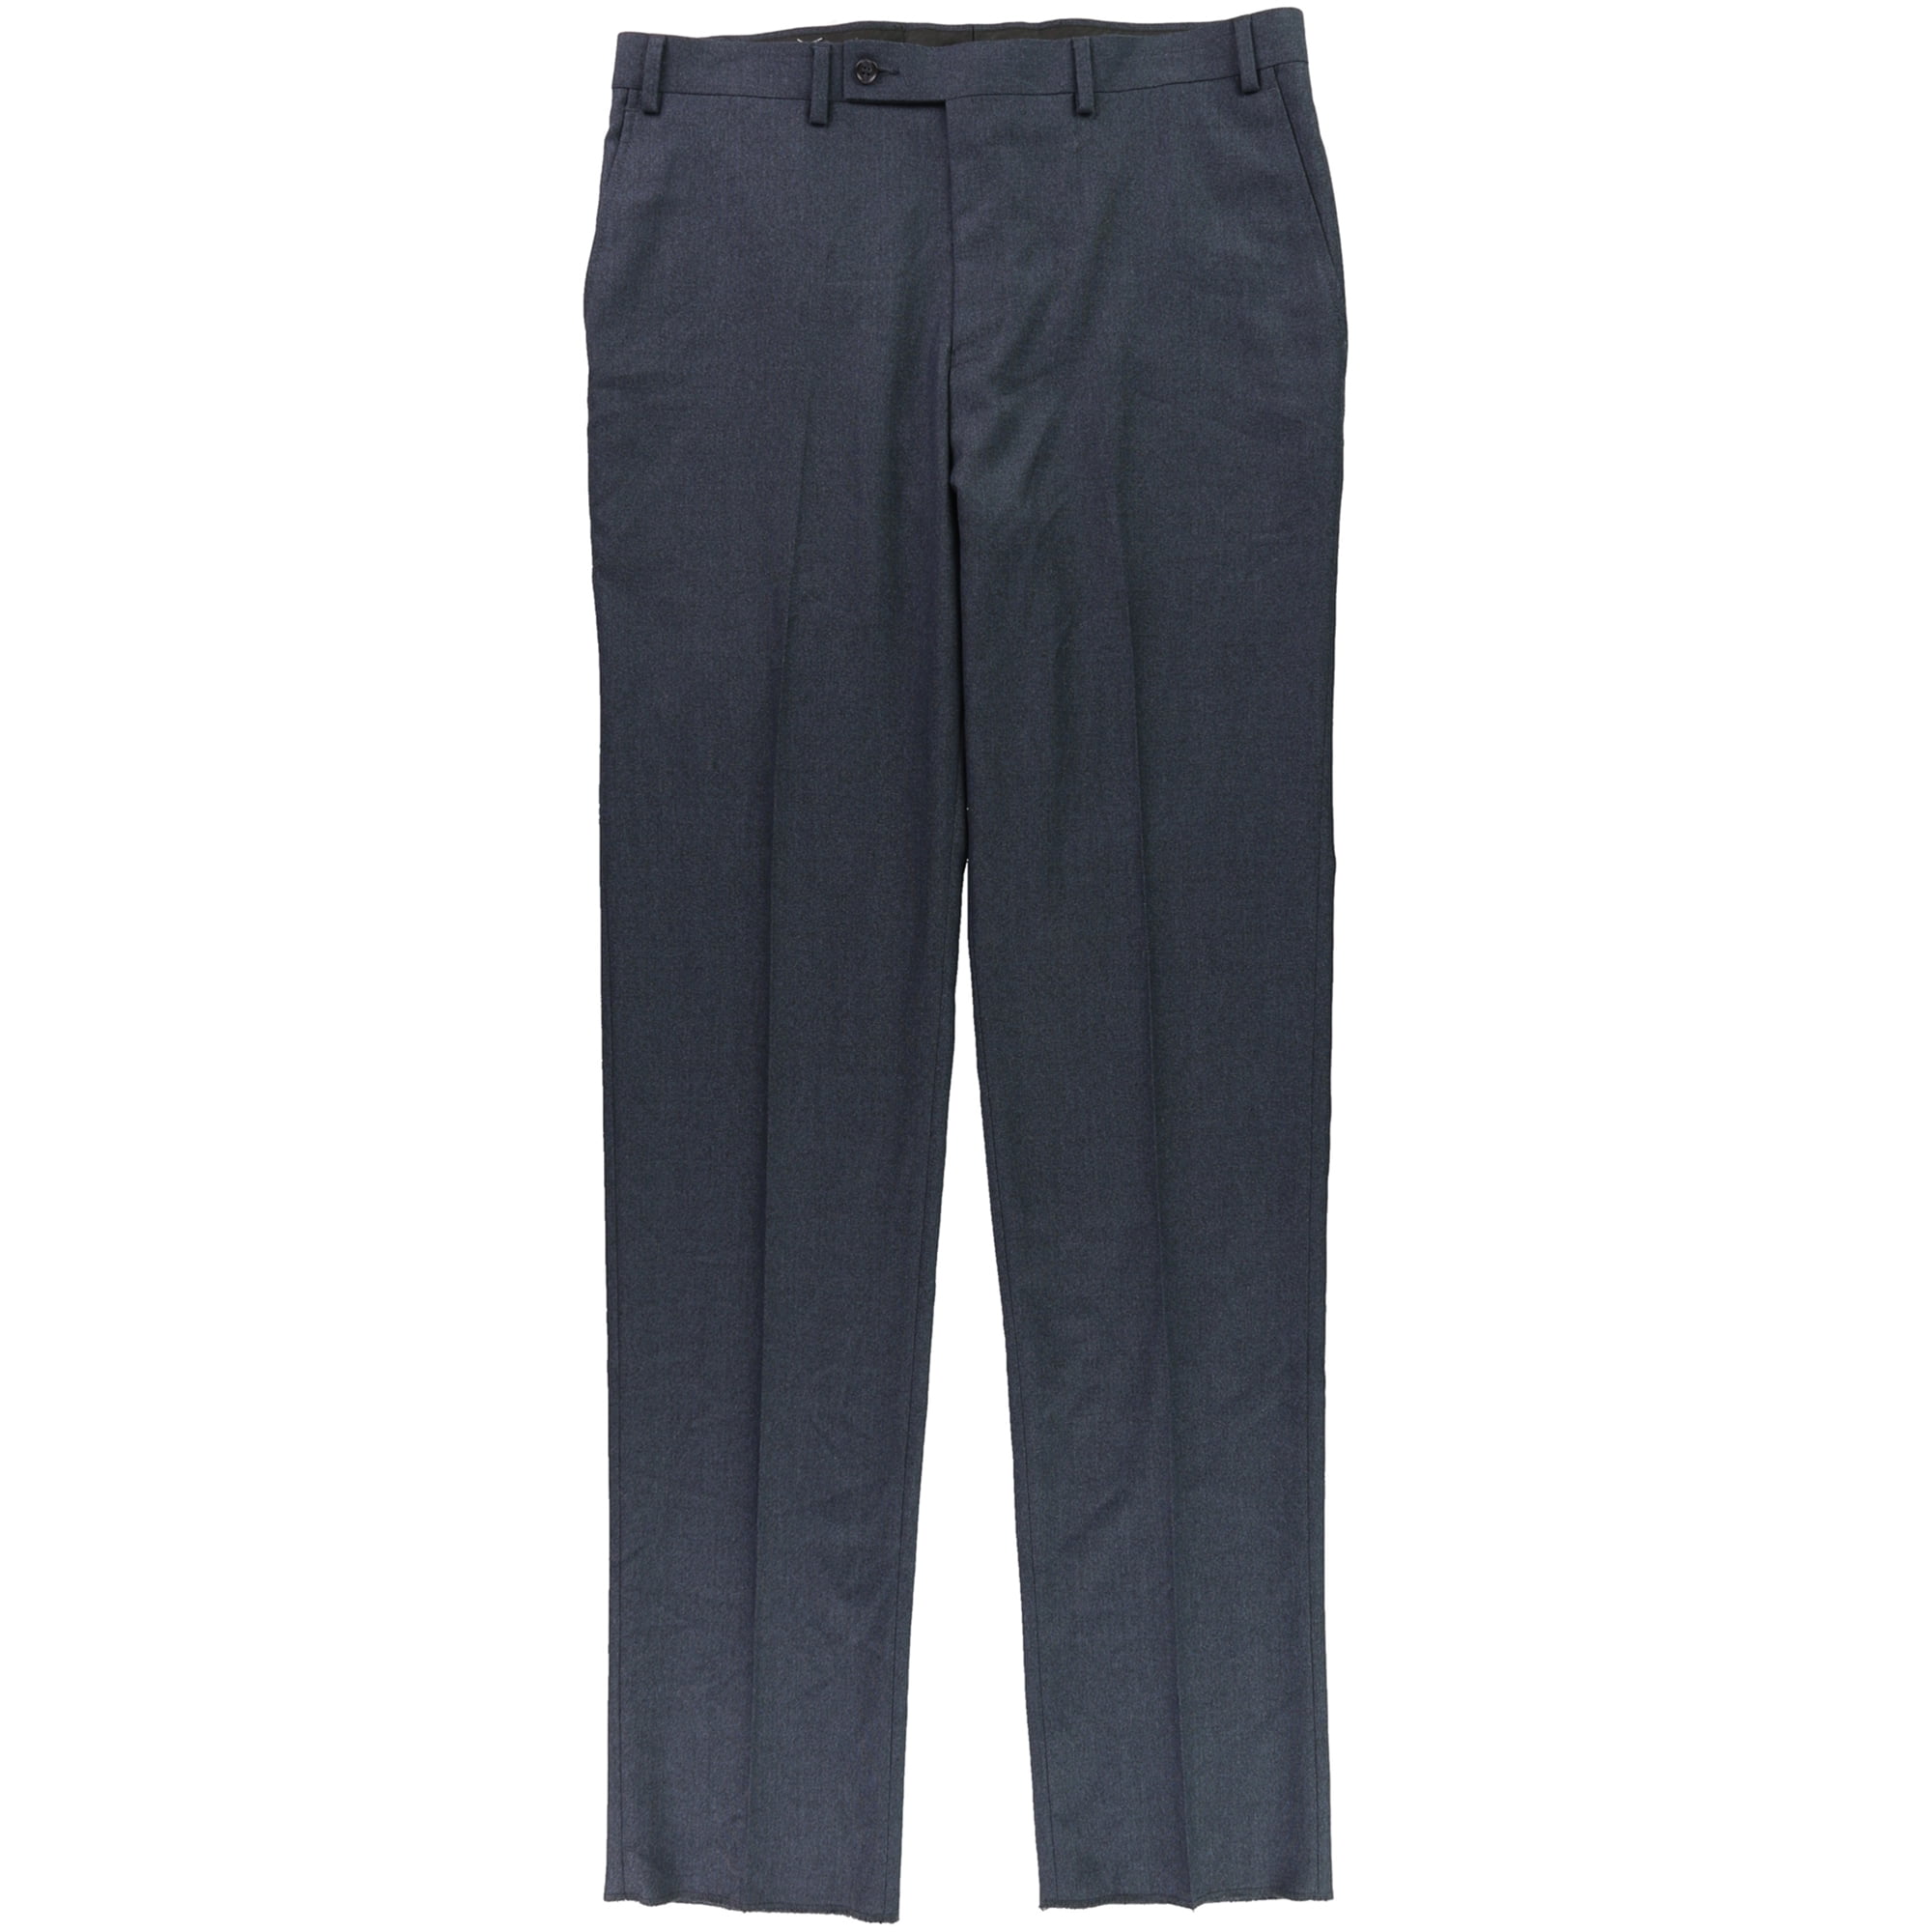 Andrew Fezza Mens Solid Heather Dress Pants Slacks, Grey, 35W x ...